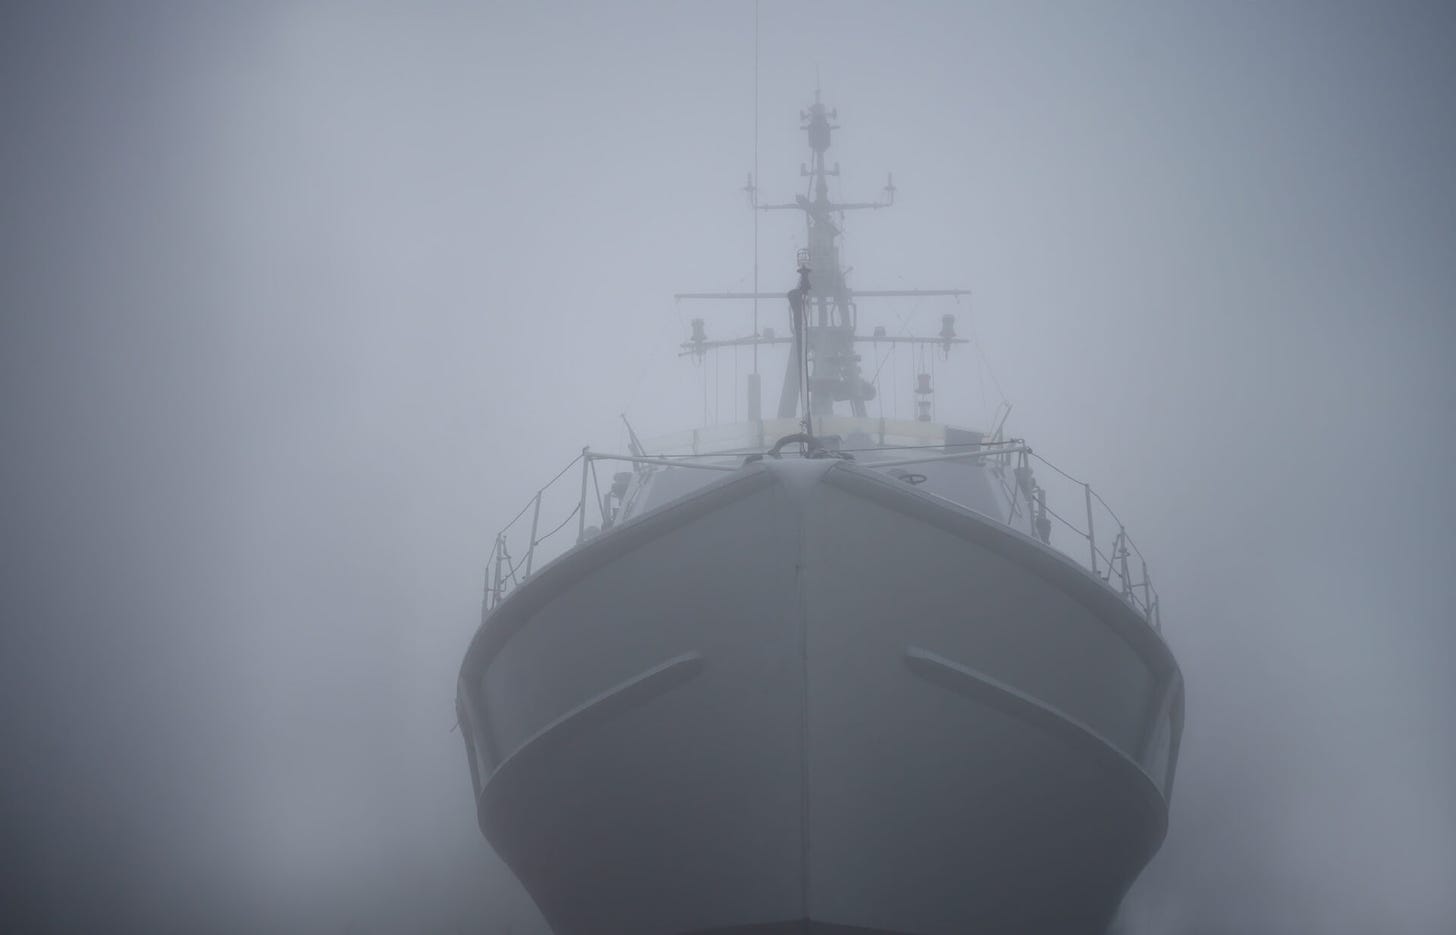 A Ghost Ship Tale for Halloween Week - Kingman Yacht Center